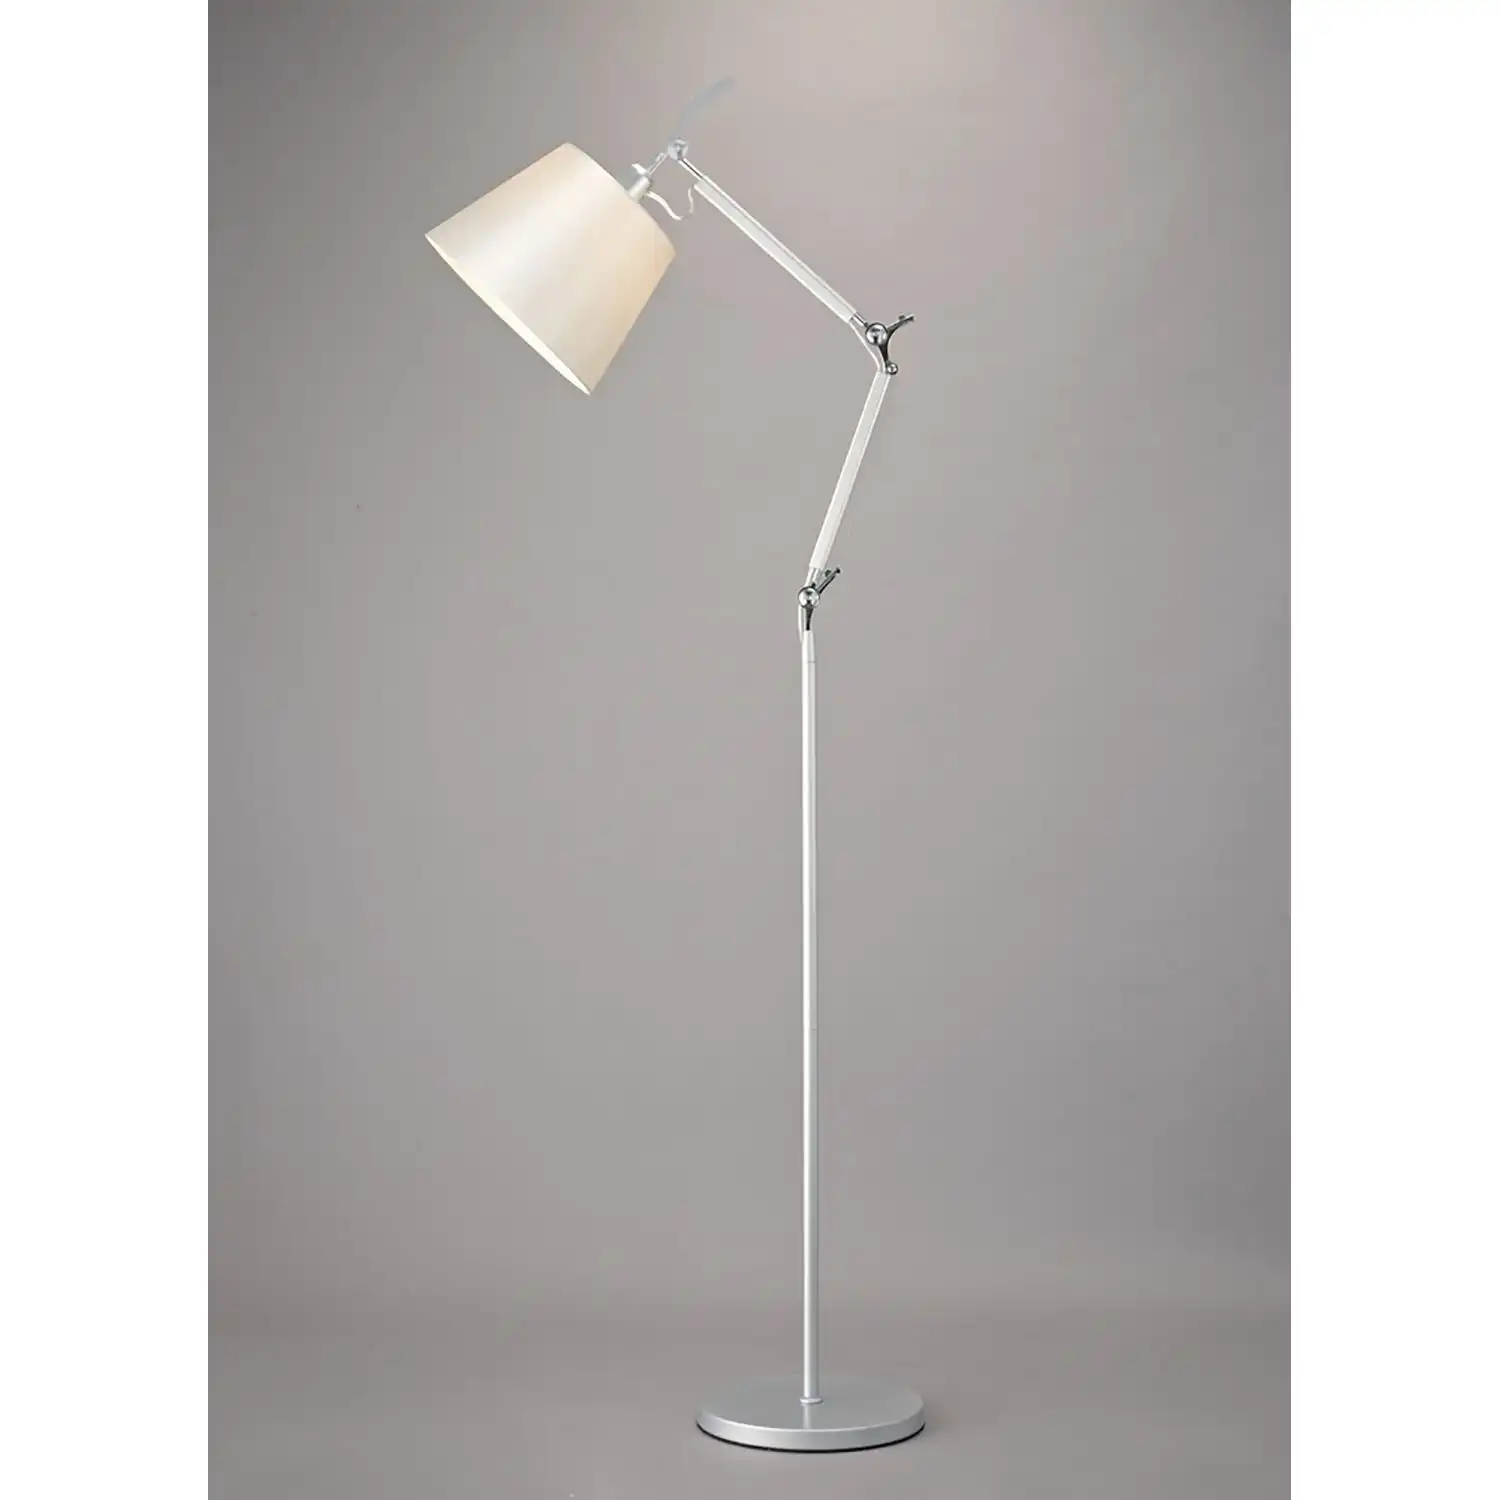 Karis Adjustable Floor Lamp 1 Light E27 Silver Polished Chrome c w Cream Pearl Shade